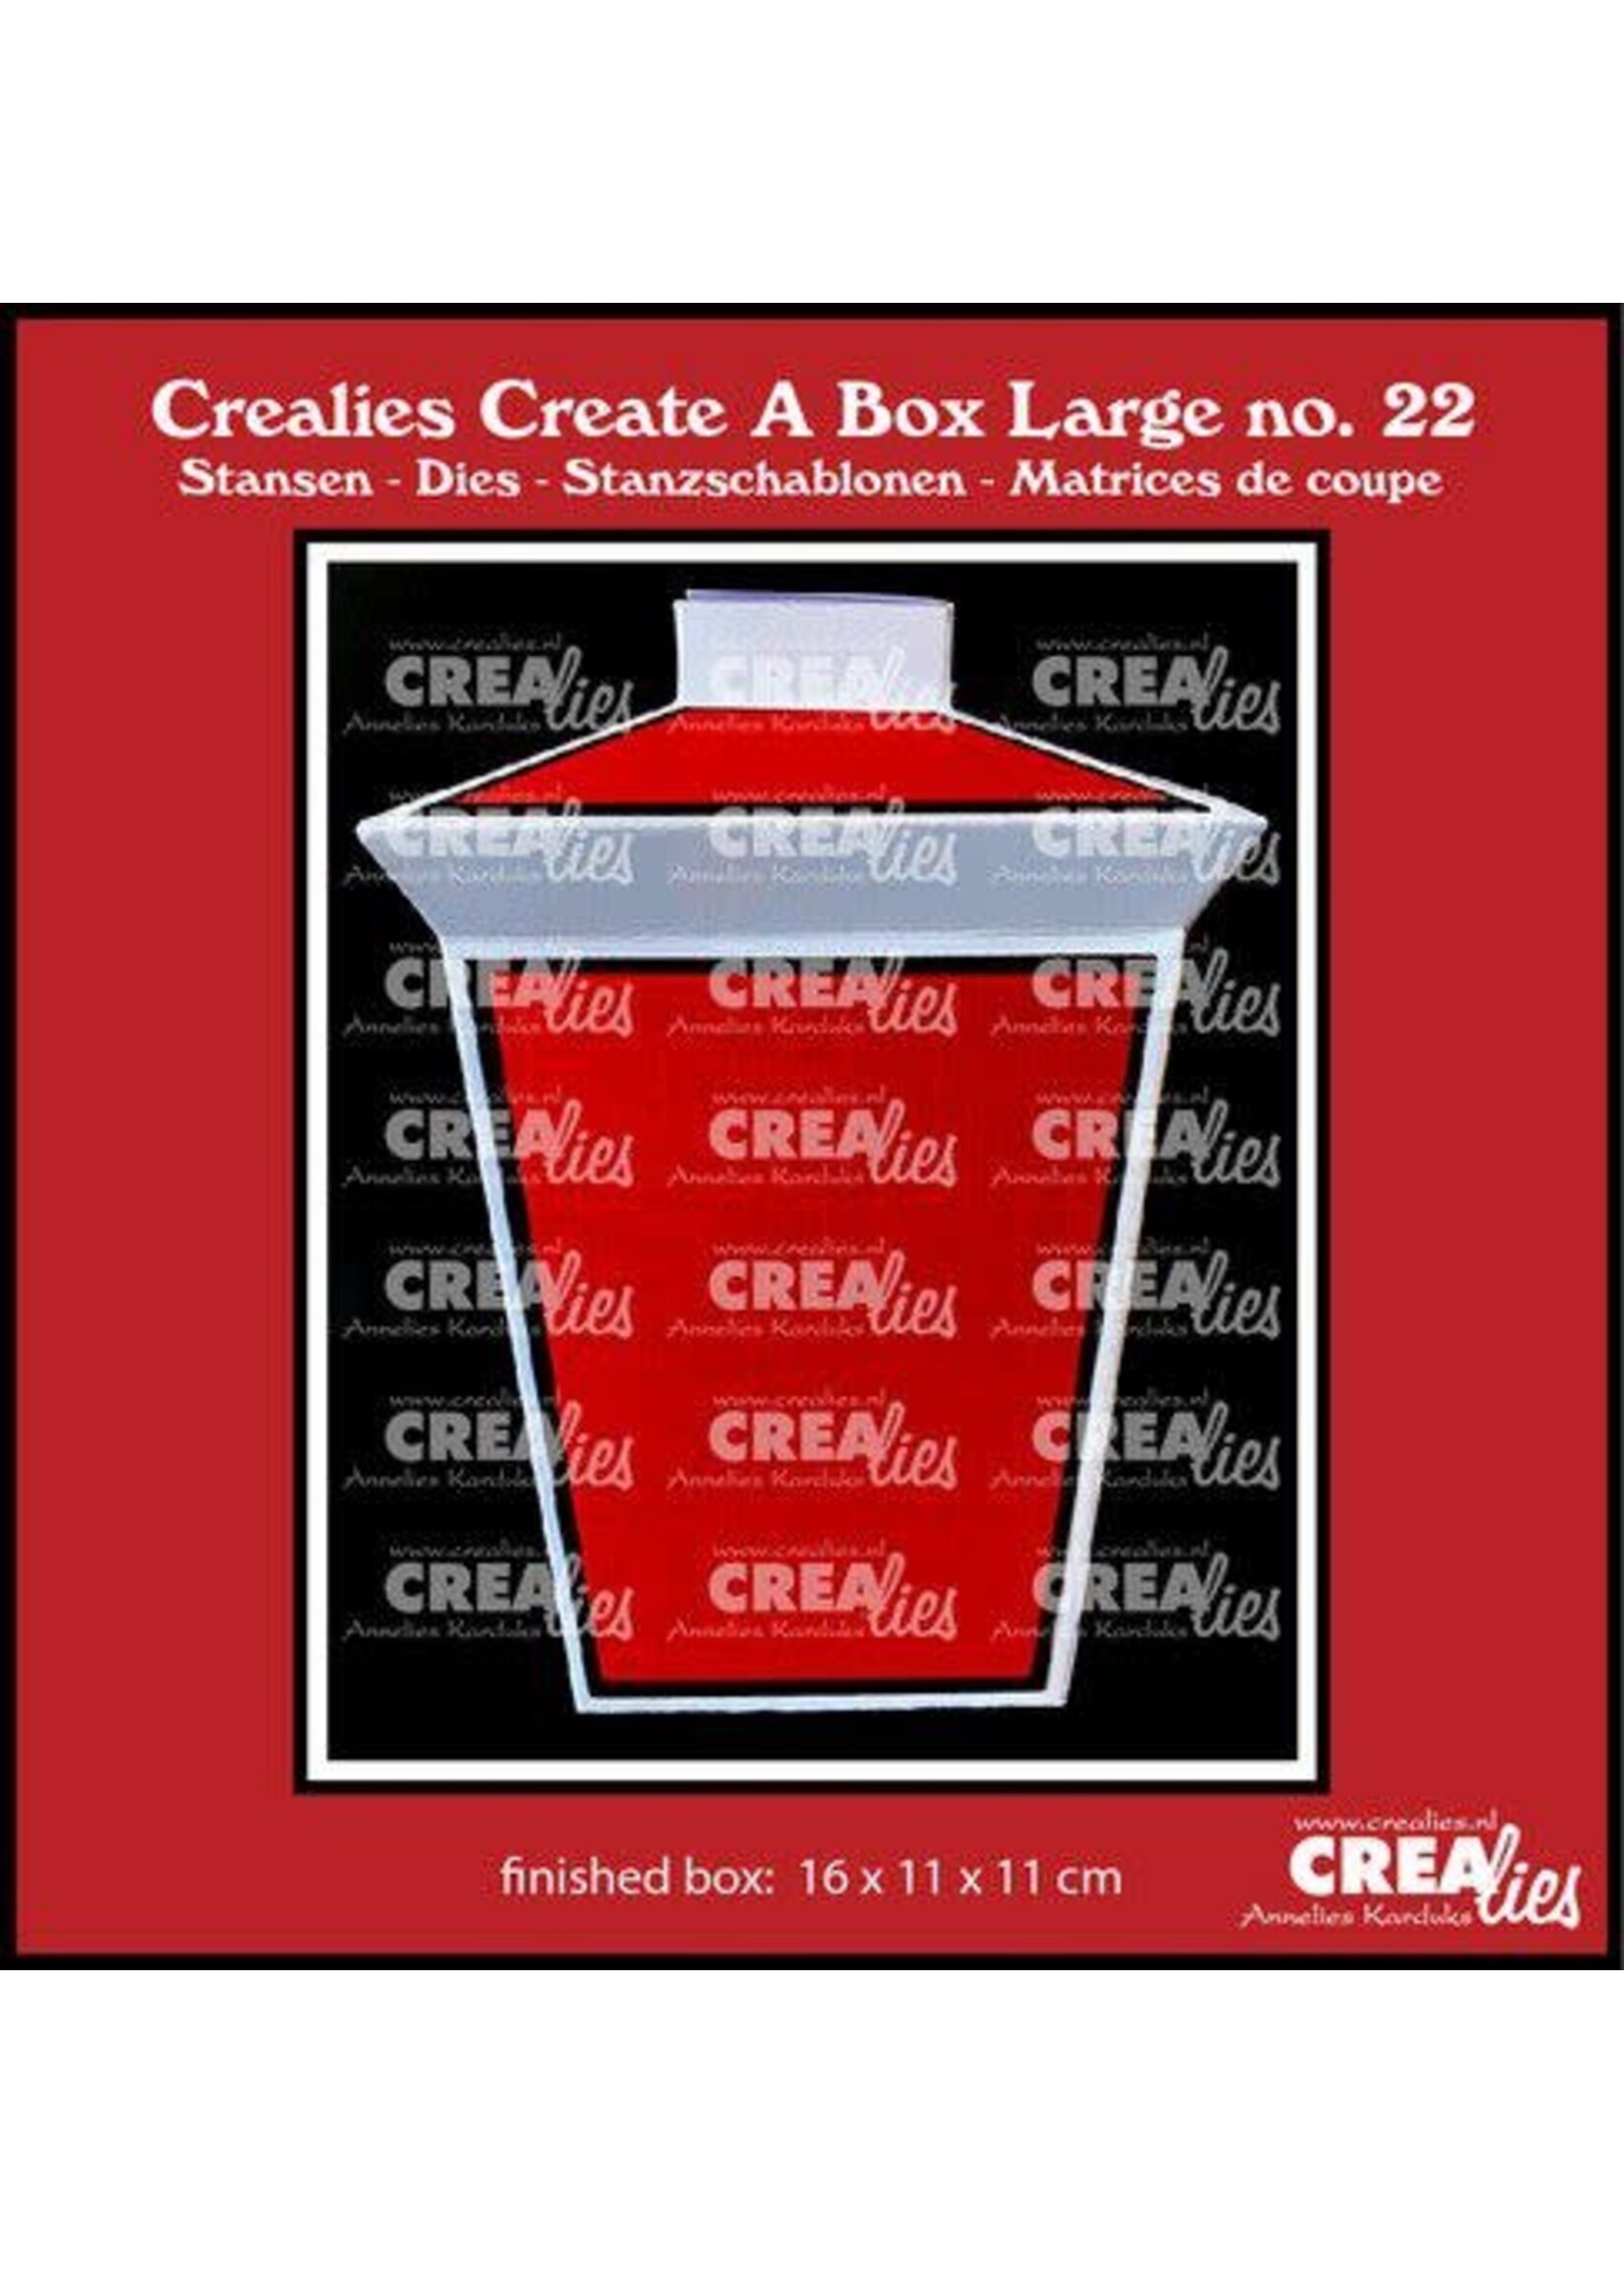 Crealies Crealies Create A Box Large Lantaarn CCABL22 finished:16x11x11cm (07-23) Artikelnummer 115634/2422